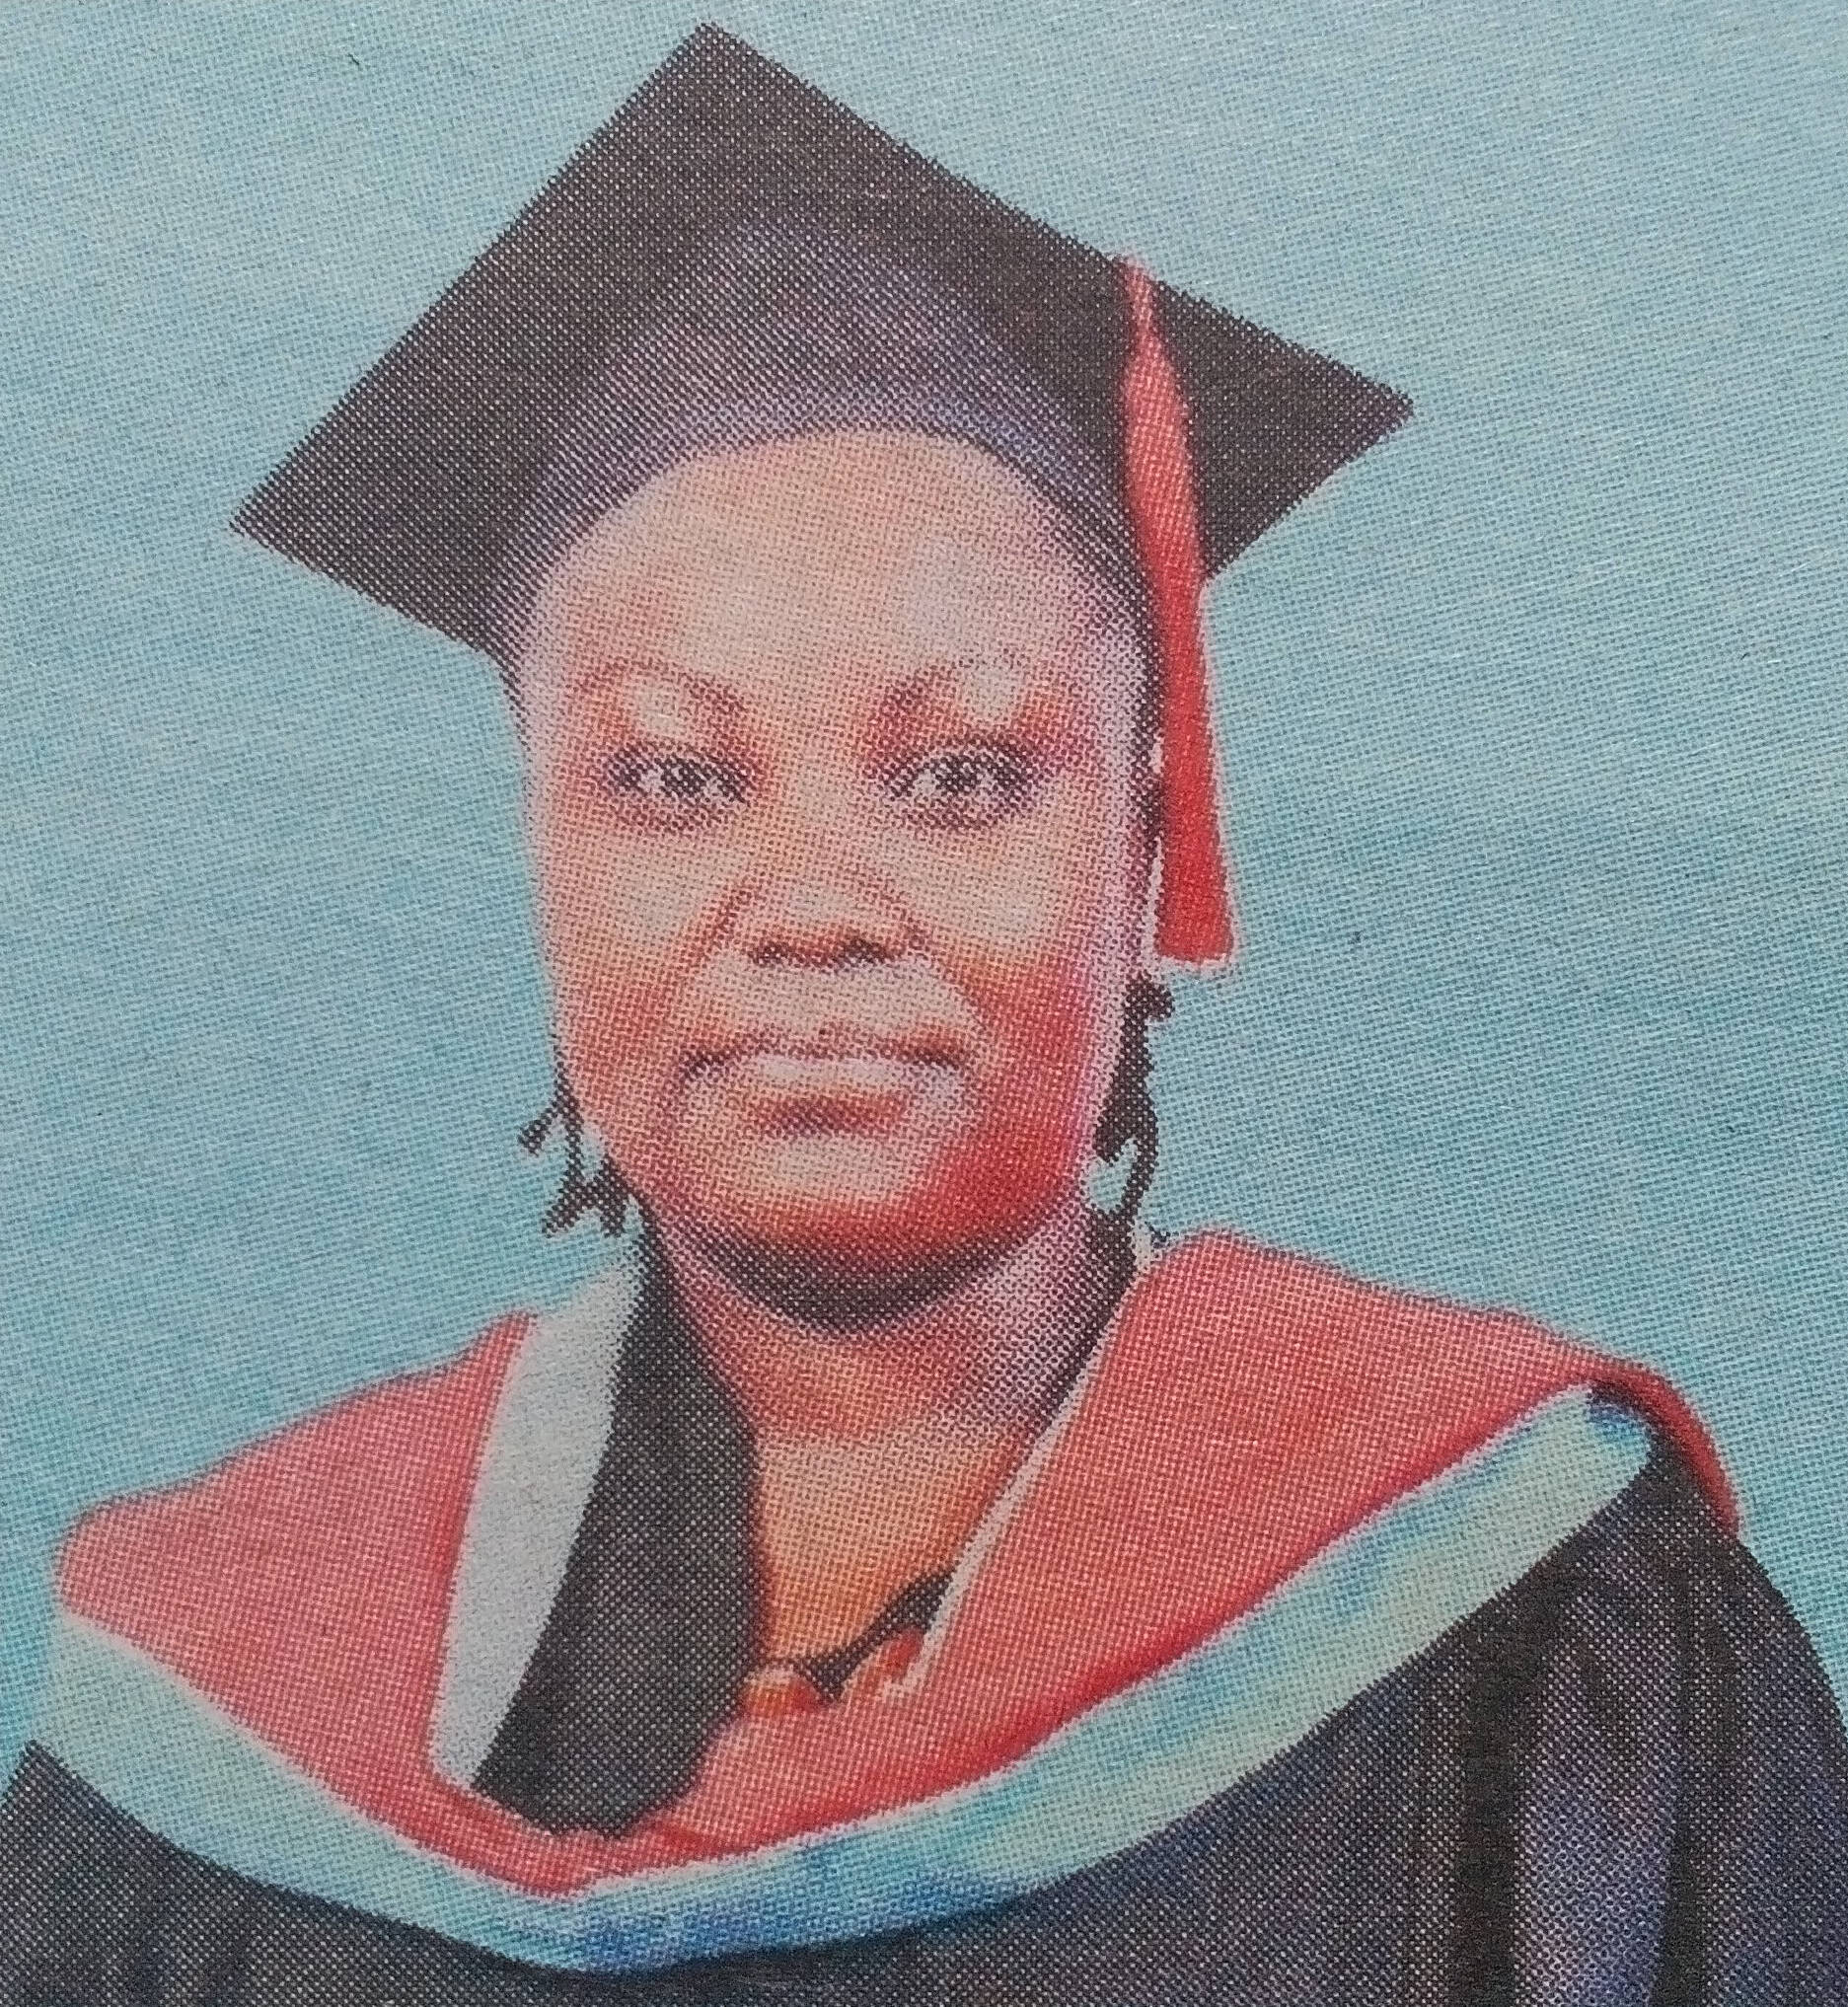 Obituary Image of Dr. Caroline Wanjiku Kariba Medical Superintendent Kerugoya District Hospital 13 November 1978 - 19th April 2017